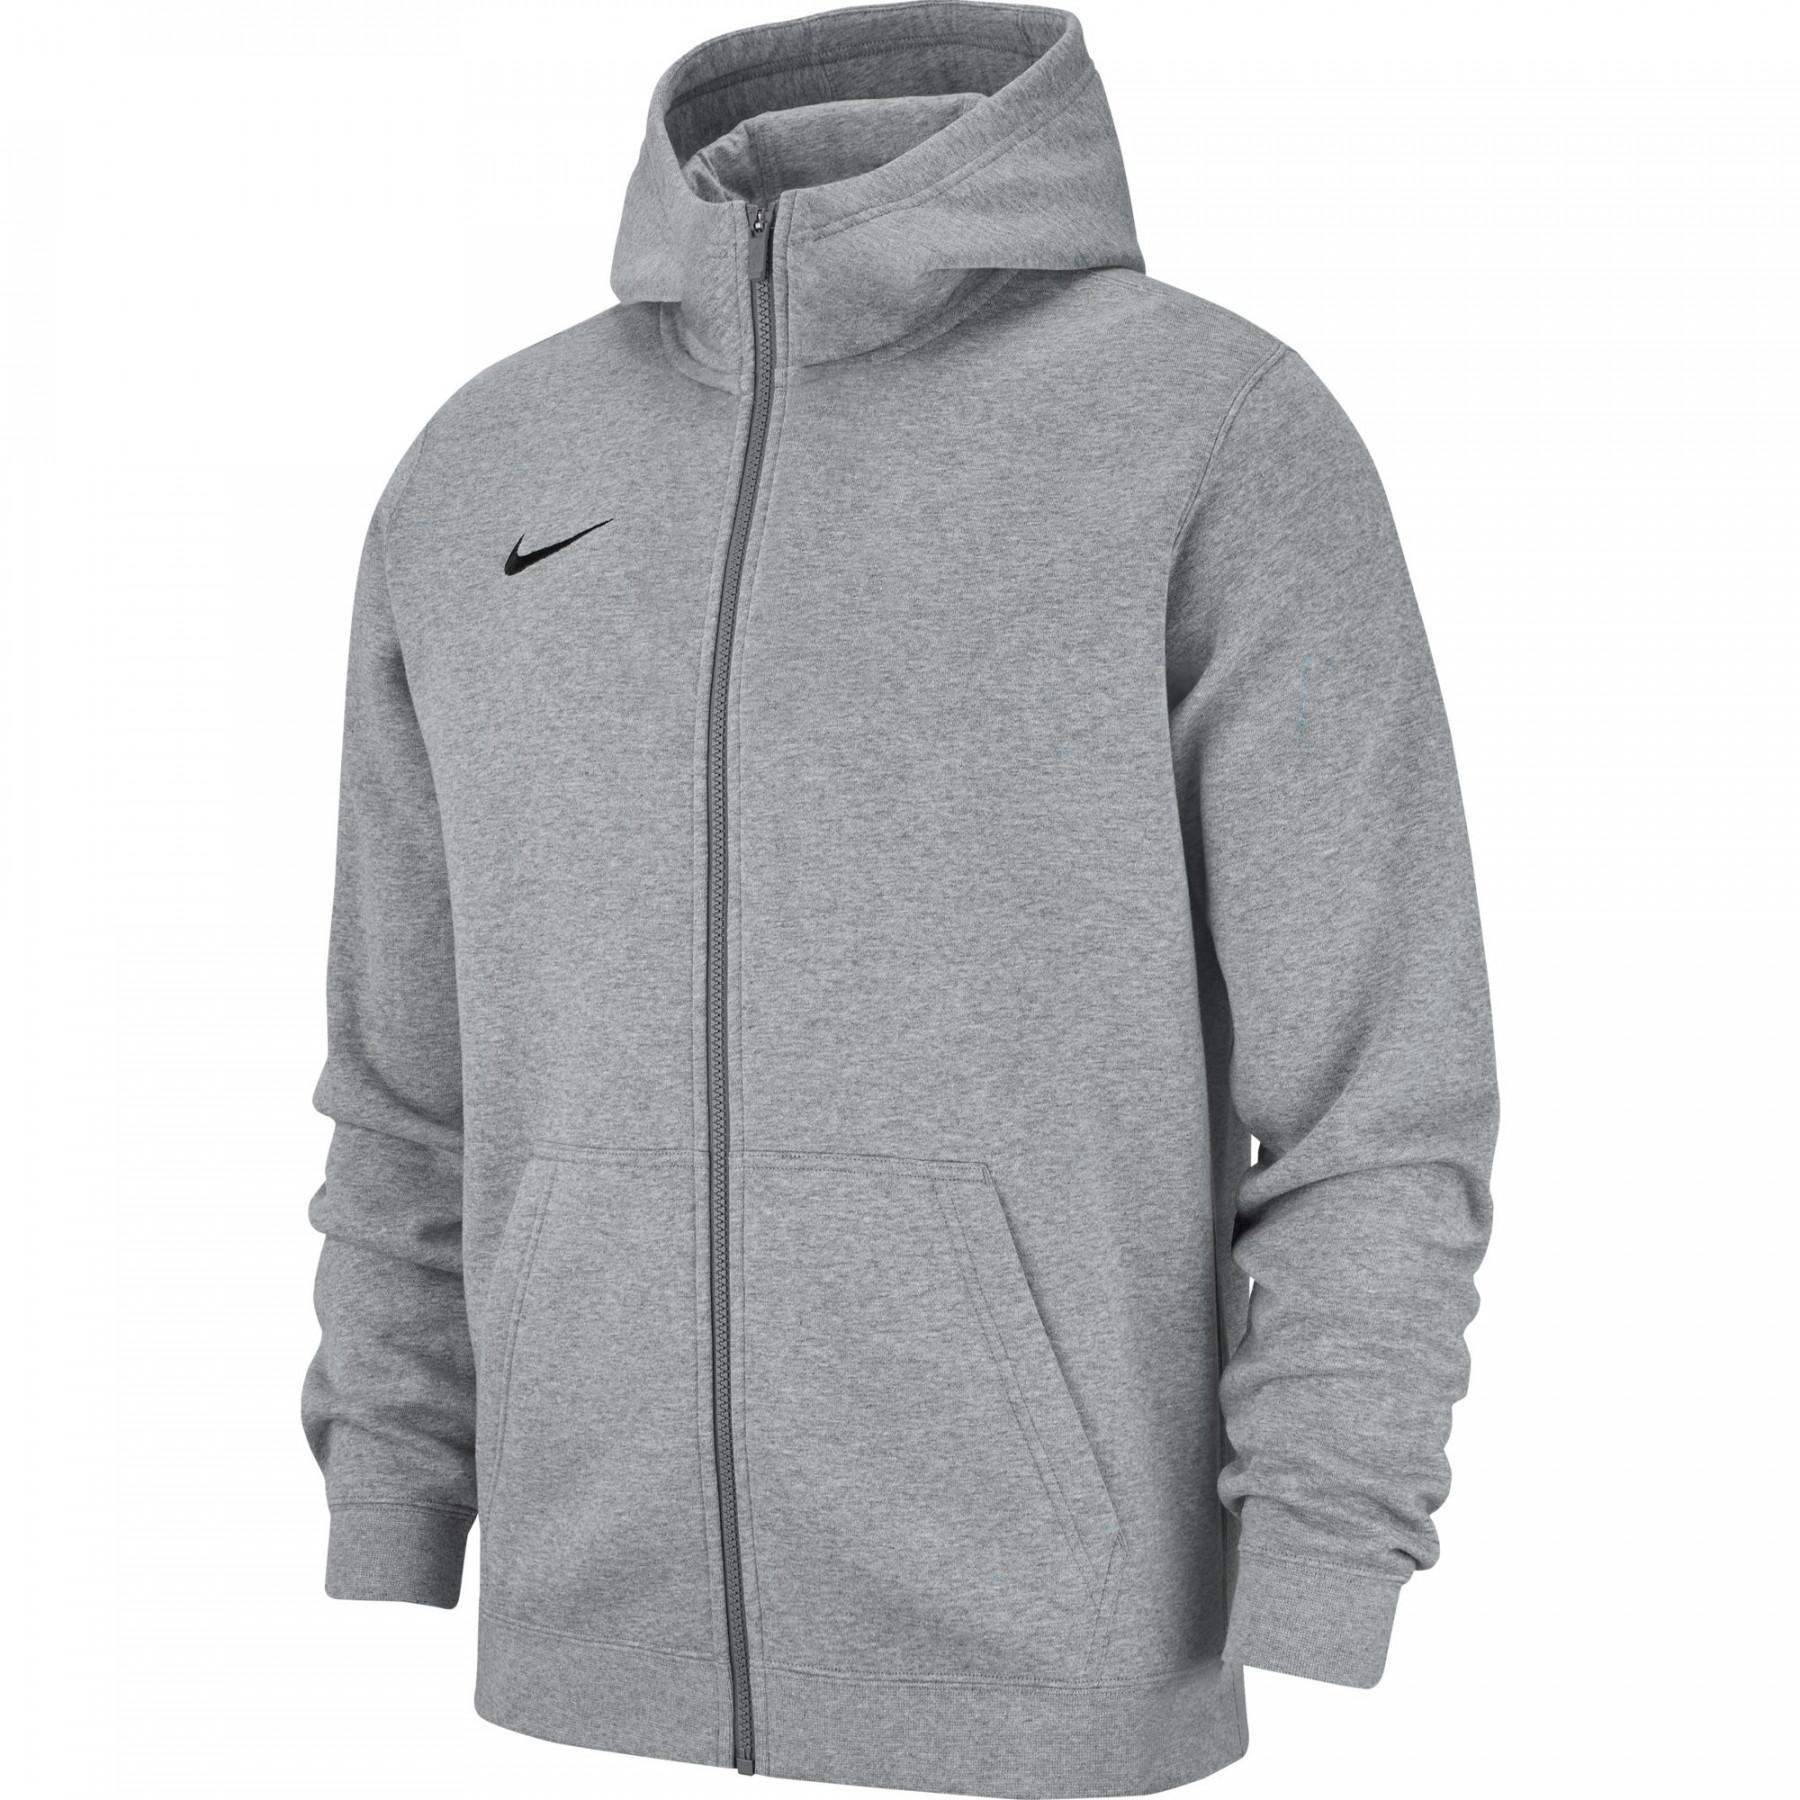 Children's hooded jacket Nike Team Club